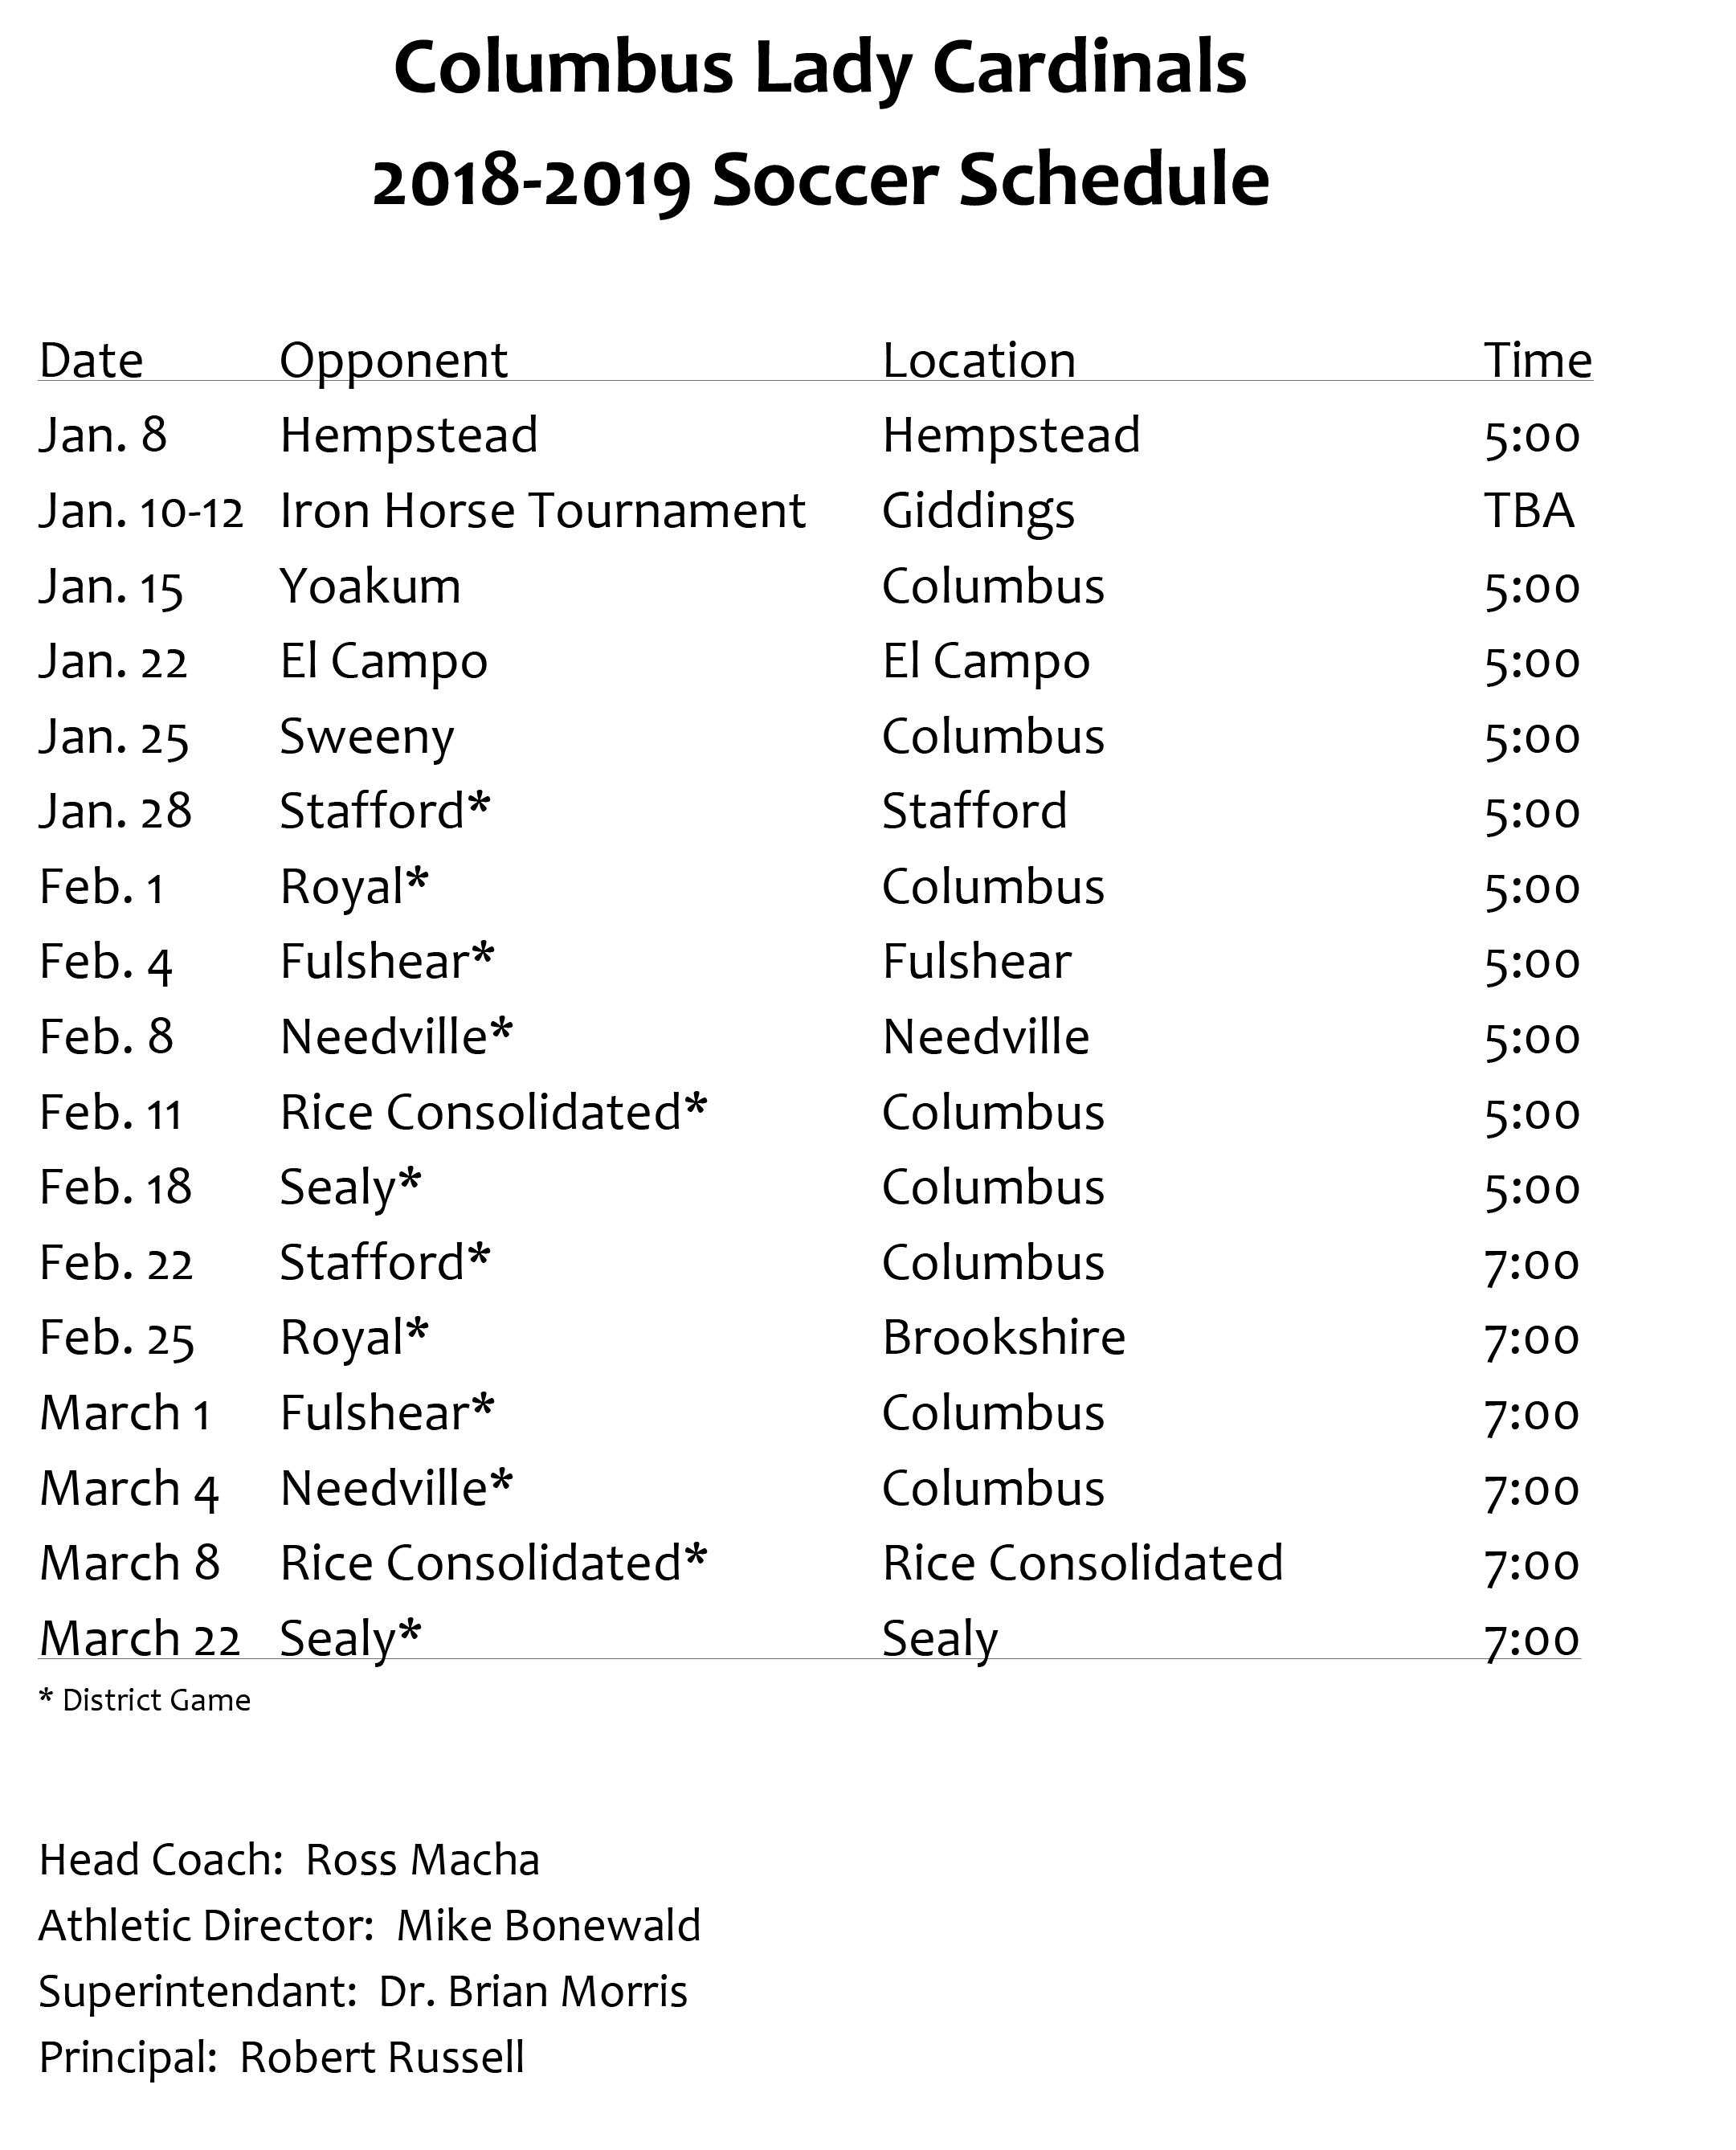 2018-2019 Columbus Girls Soccer Schedule